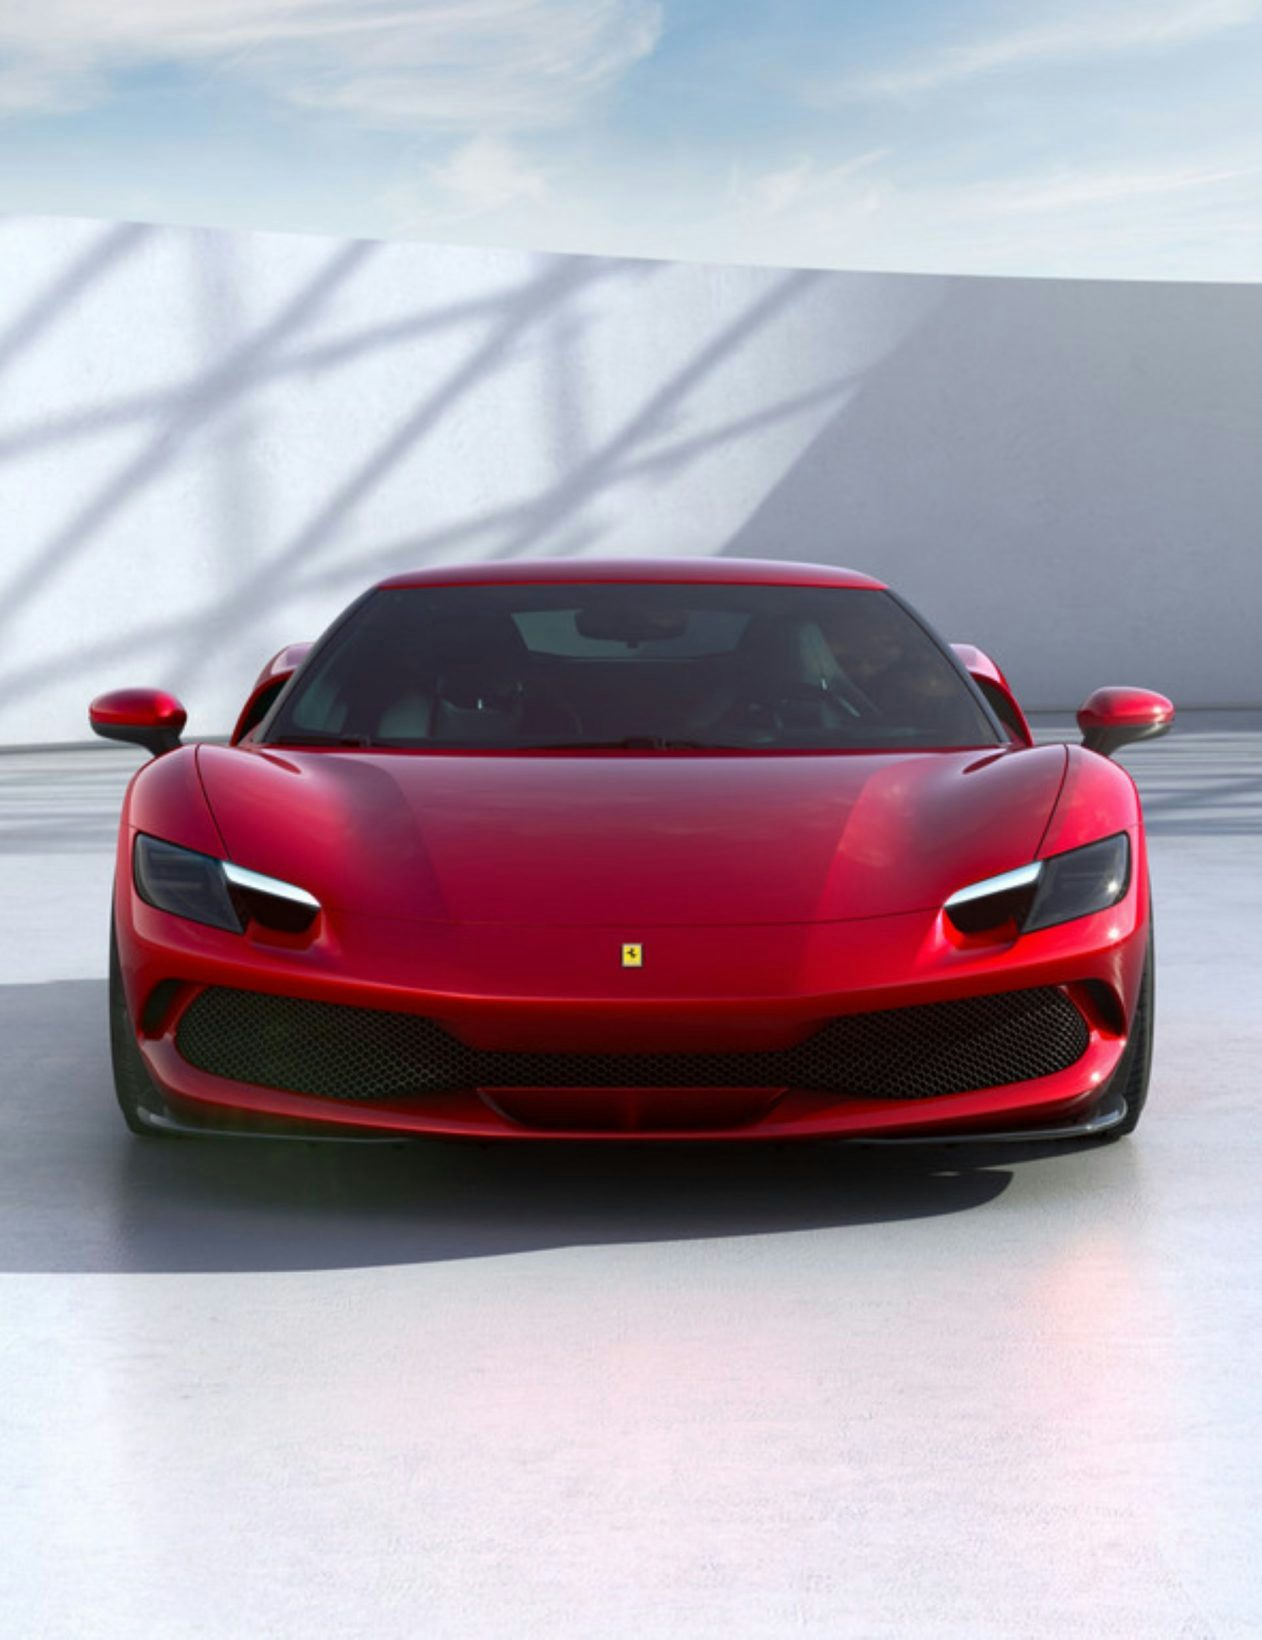 Ferrari valued at €70 billion joins the Stoxx 50 index